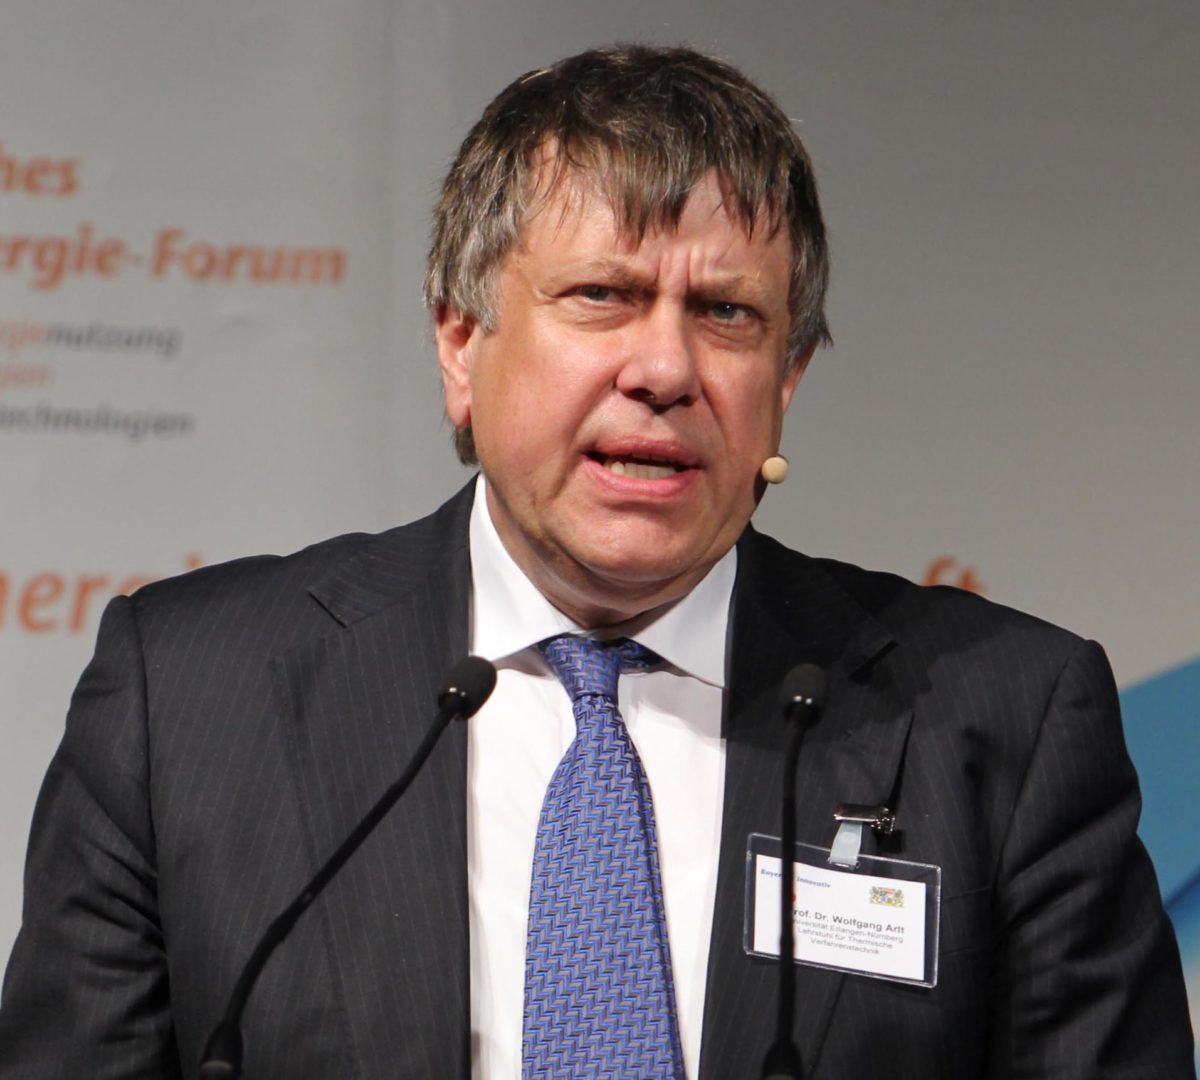 Prof. Dr. Wolfgang Arlt